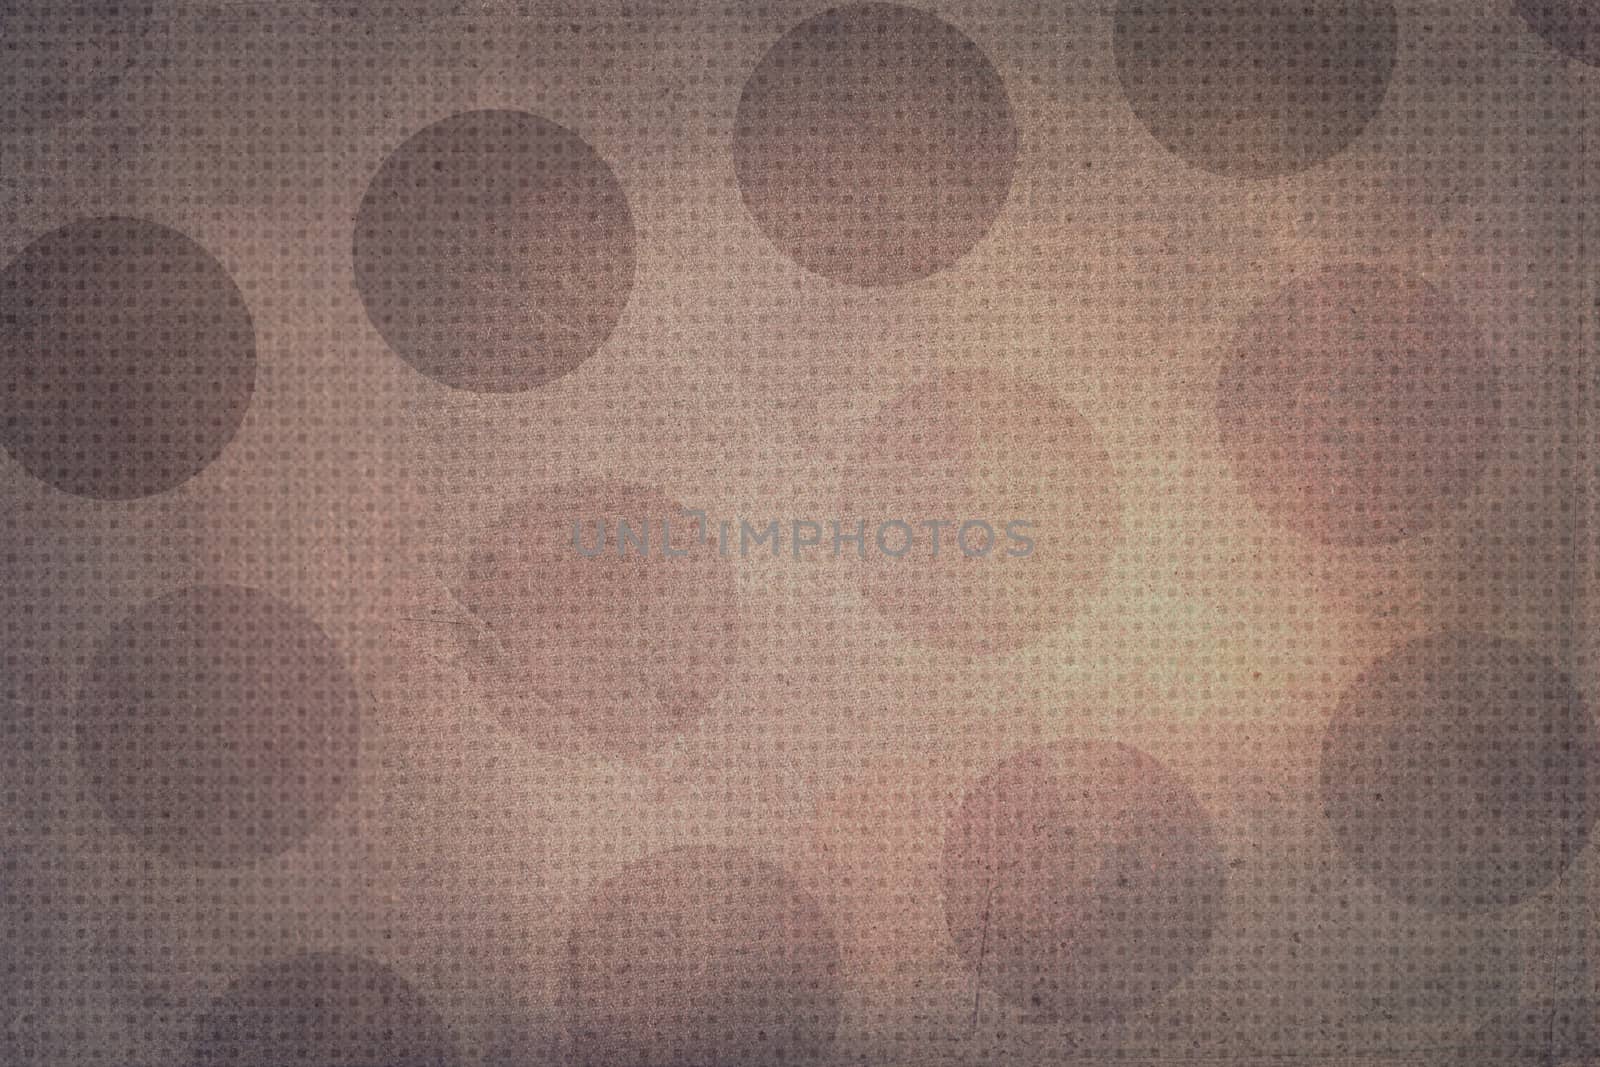 Brown Dots Texture by MaxalTamor